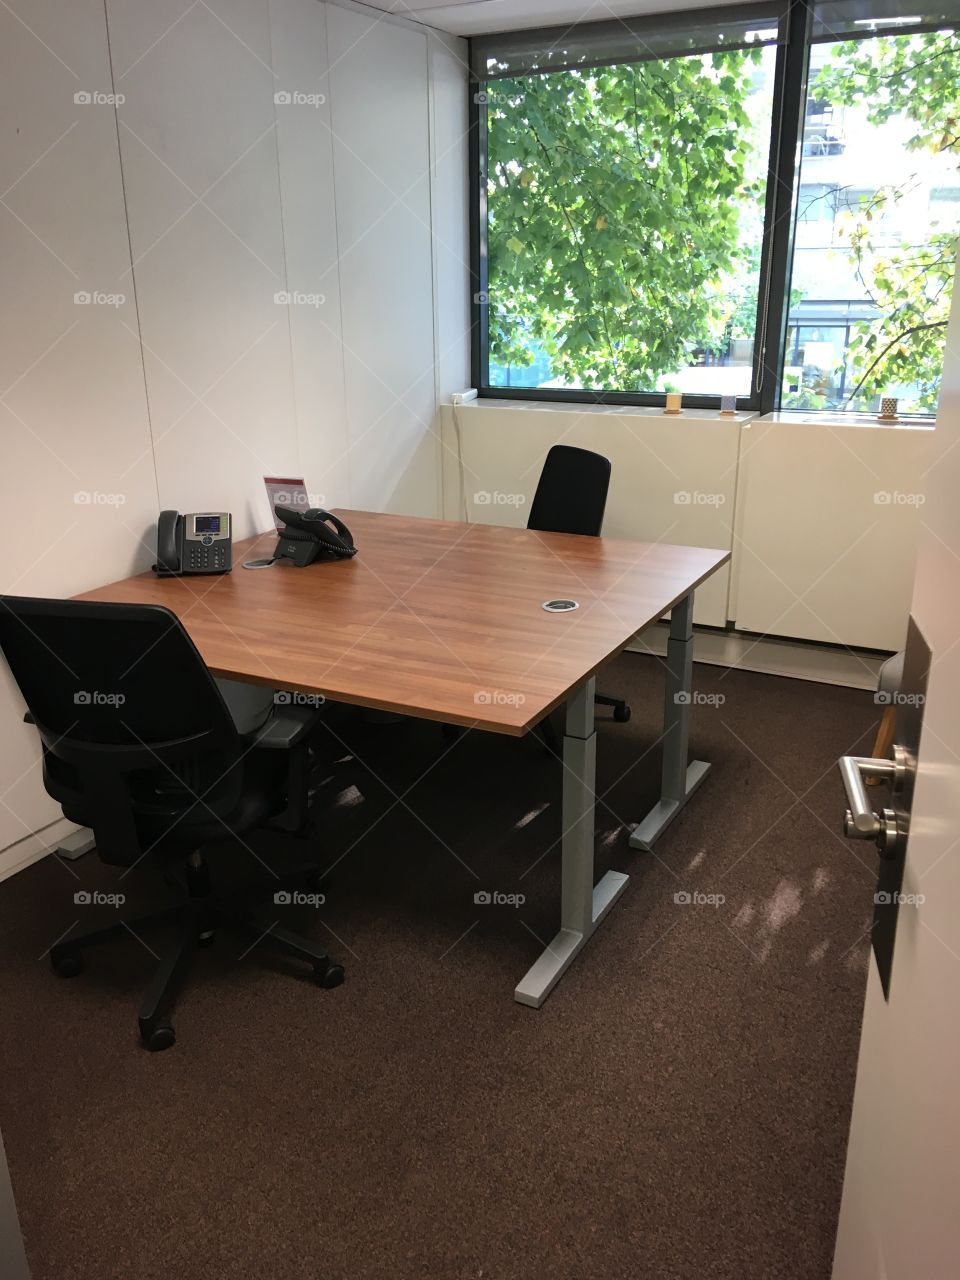 Office in coworking center - bureau dans un espace de coworking